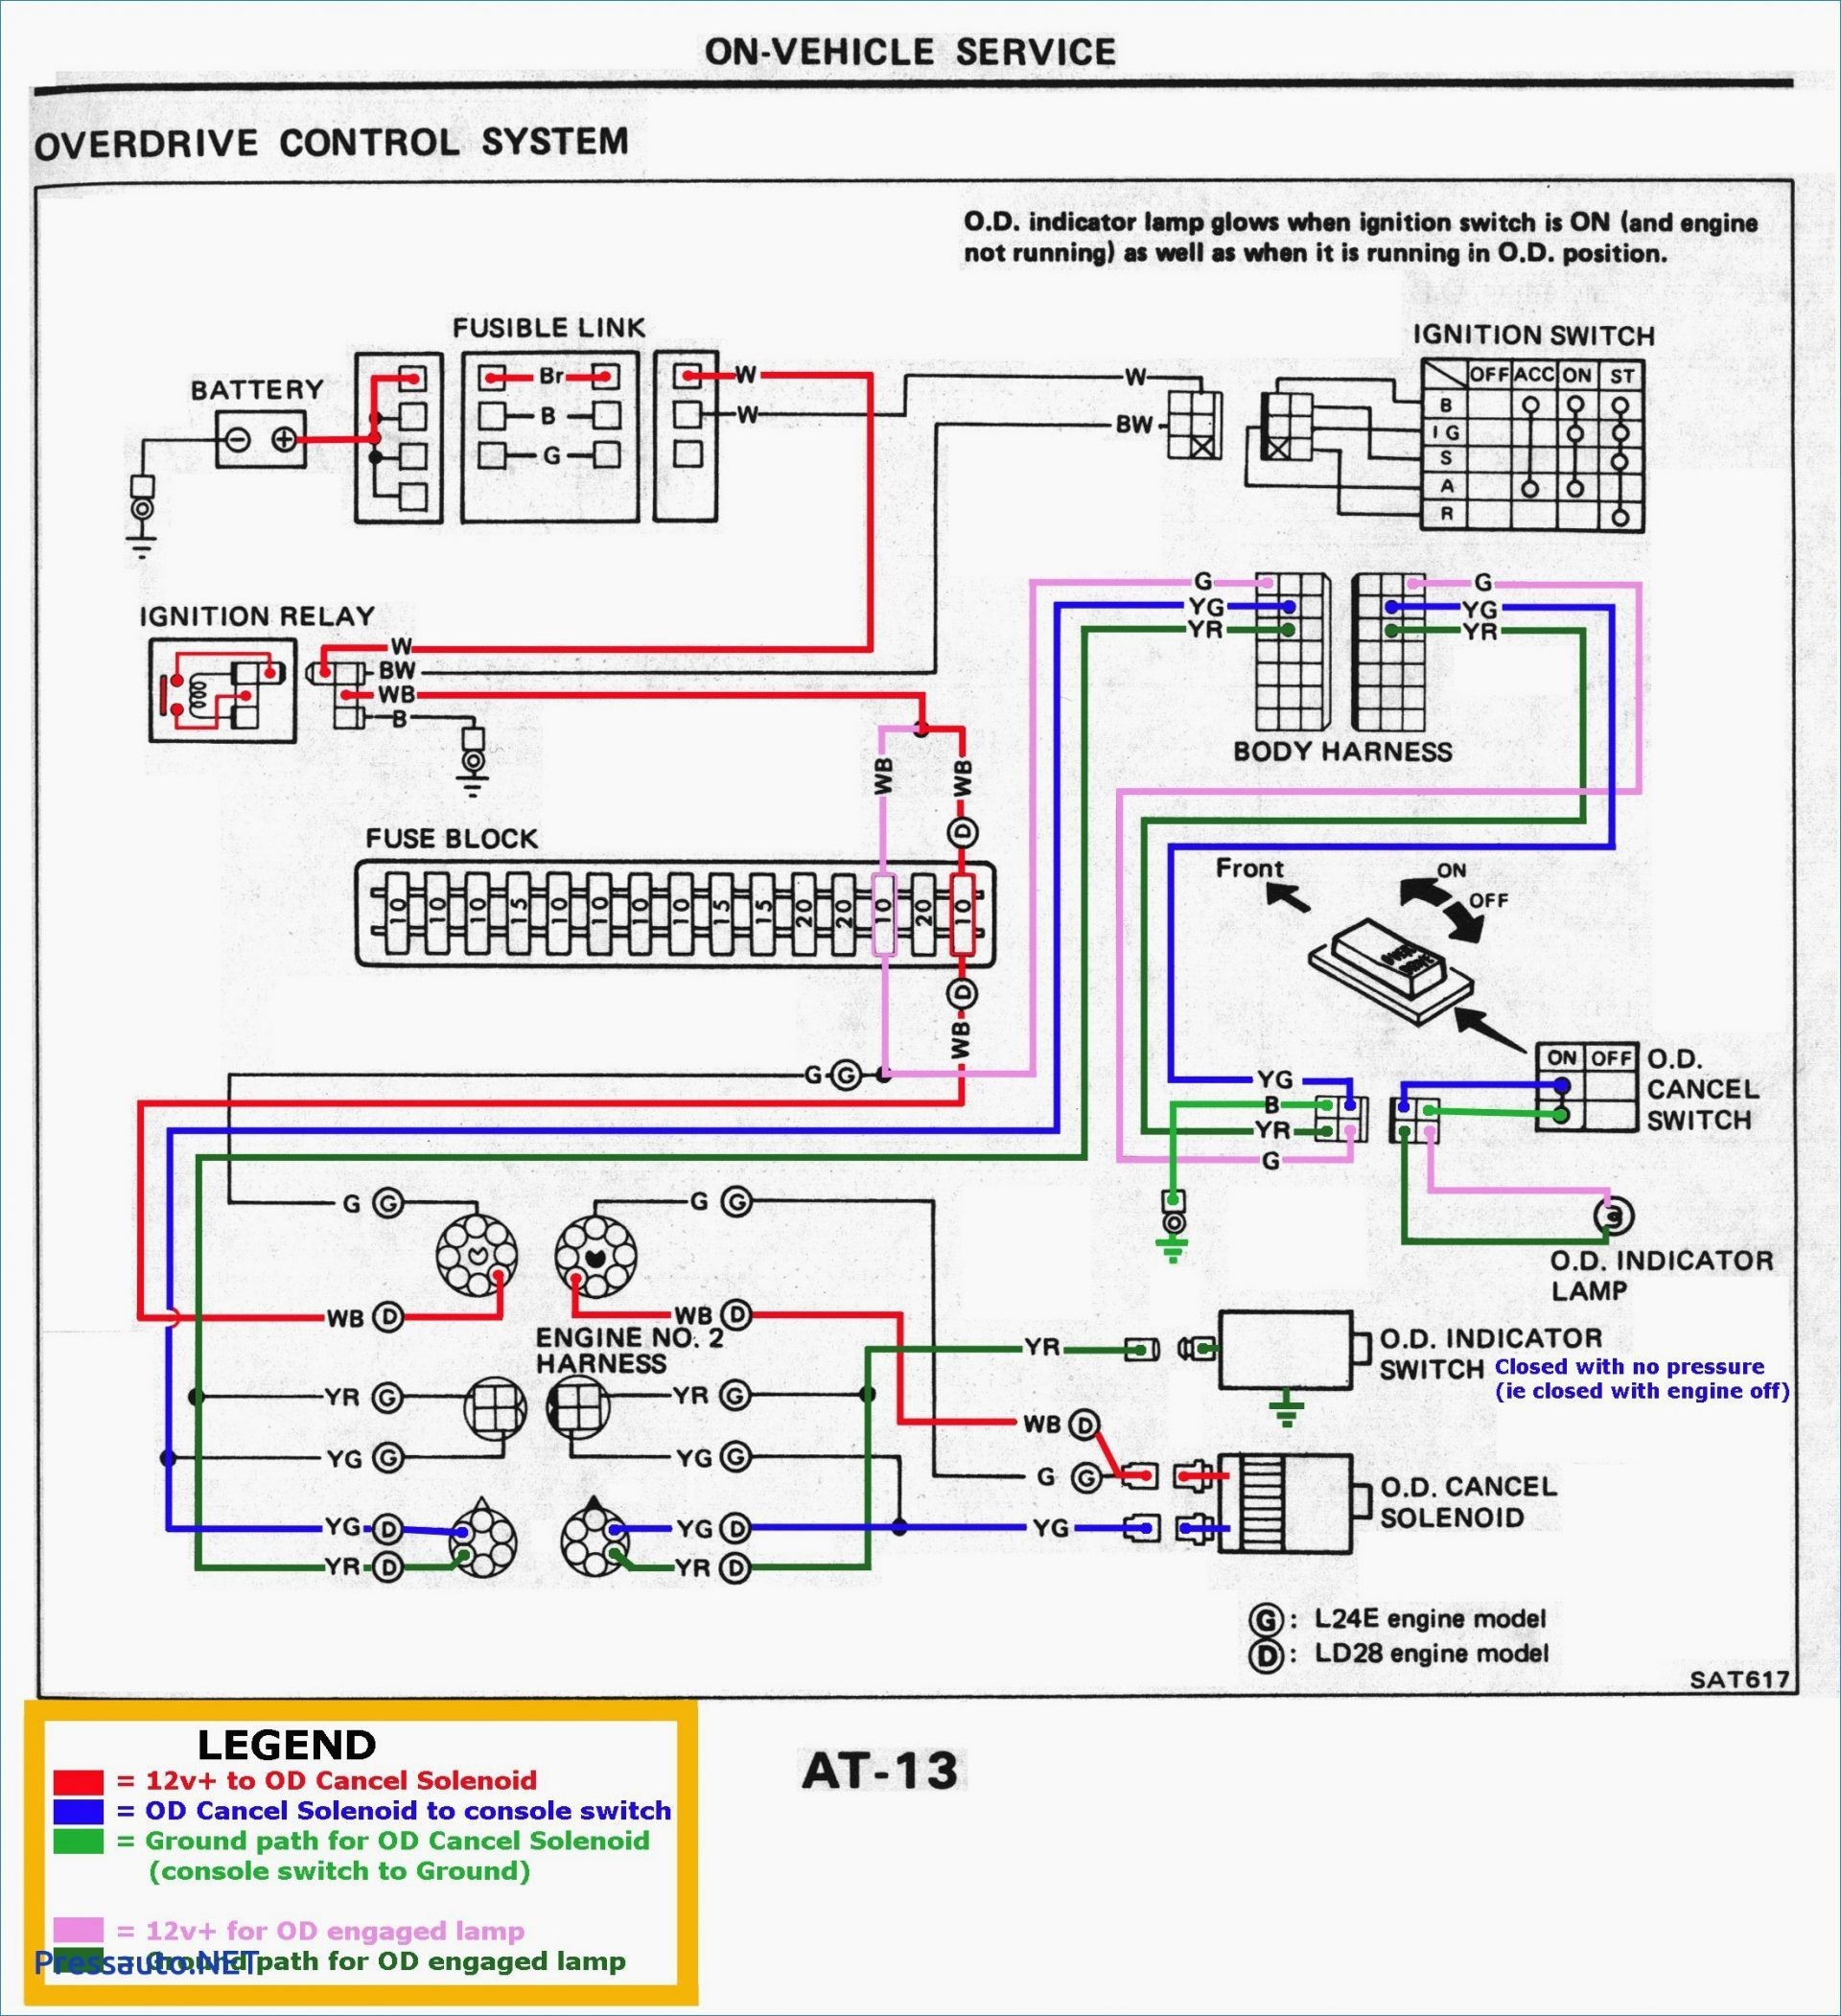 Alternator Wiring Diagram Problem New 1988 toyota Pickup Engine Alternator Demo Wiring Connection to Battery